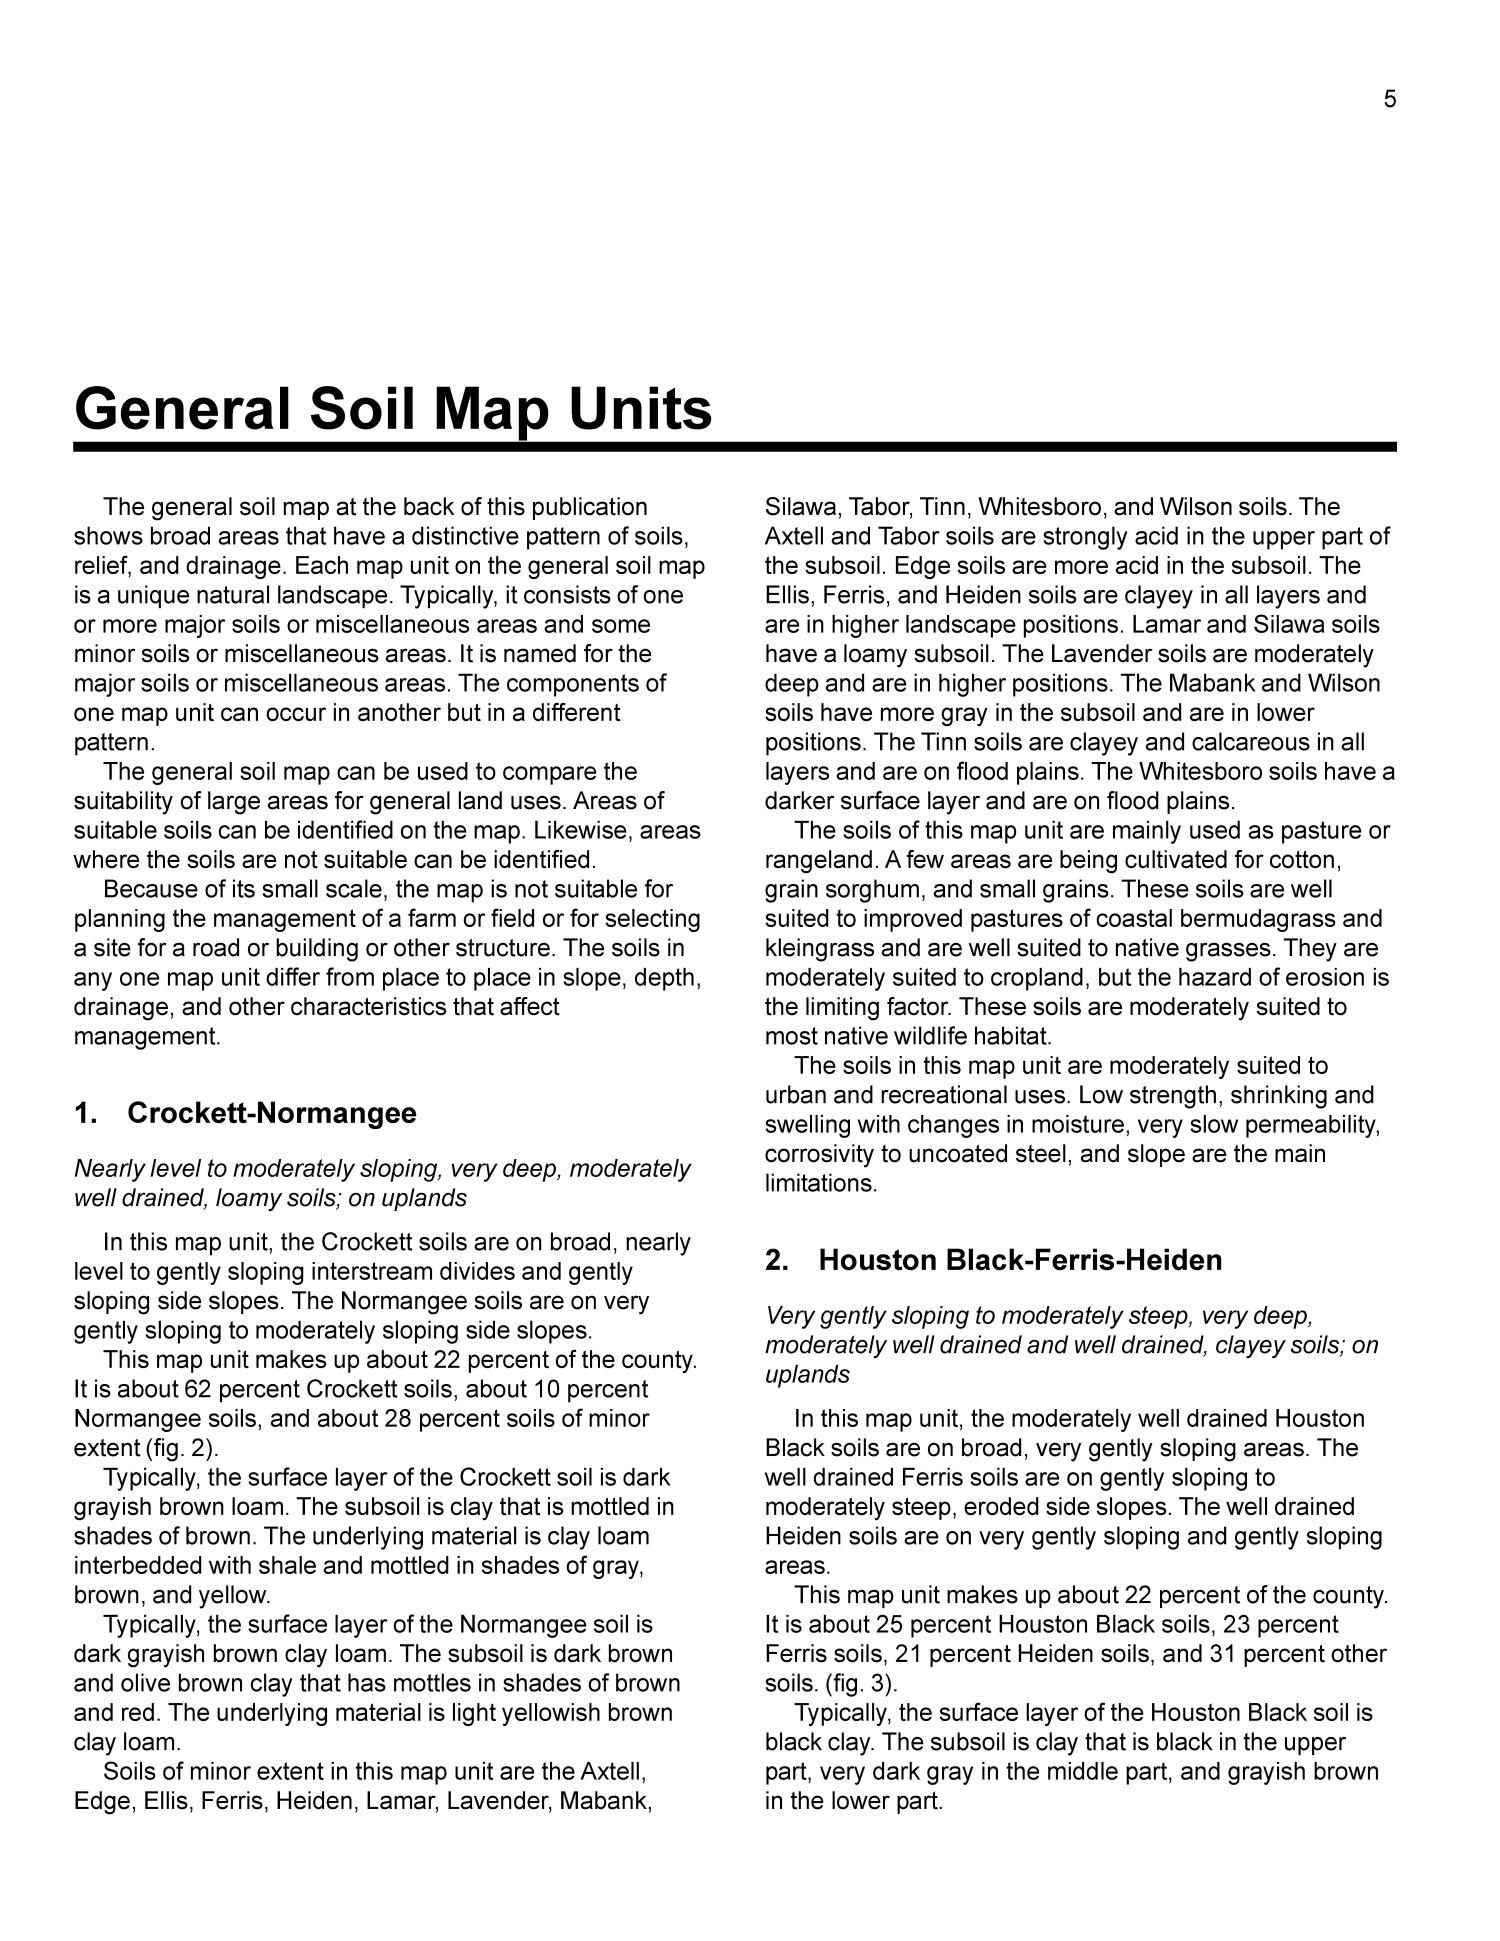 Soil Survey of Limestone County, Texas
                                                
                                                    5
                                                